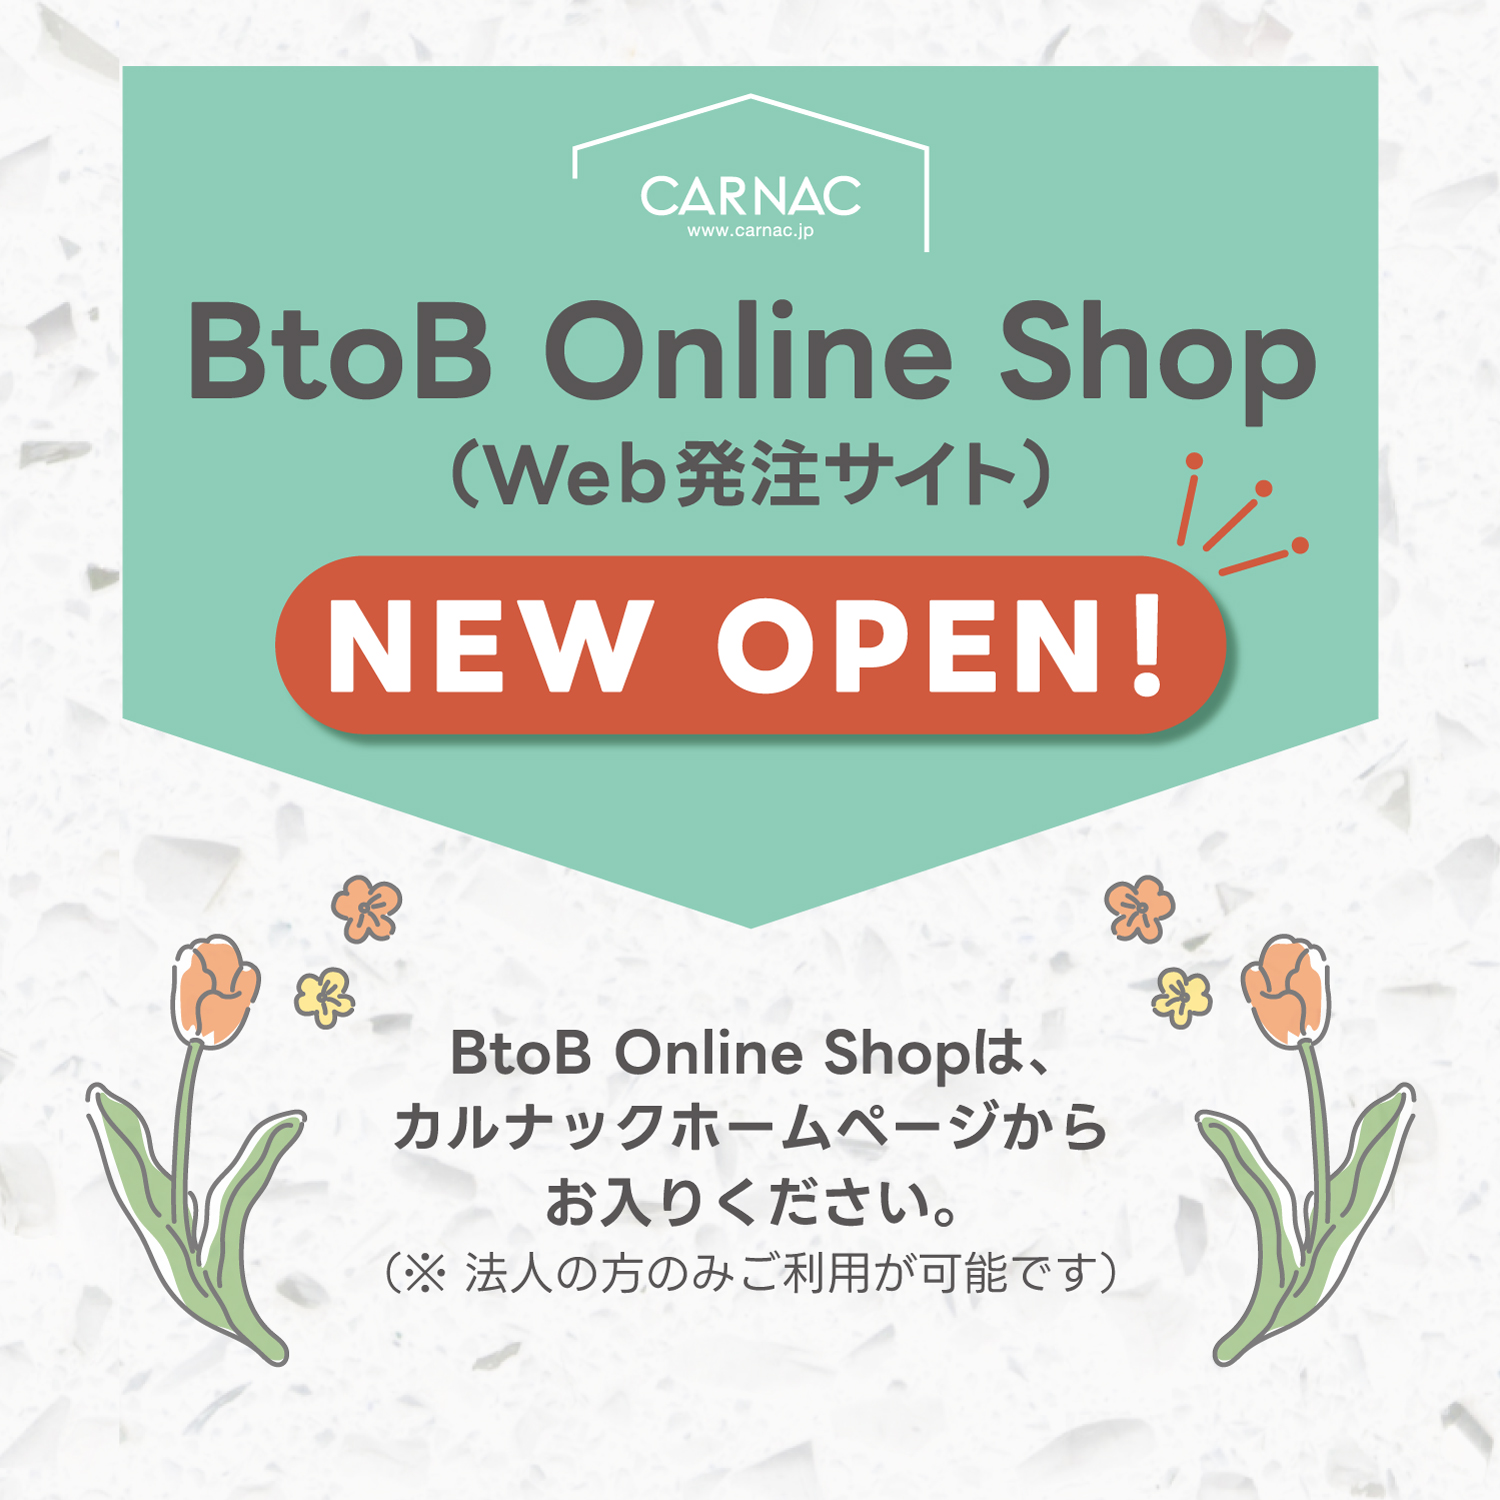 B to B Online Shop がオープンしました！